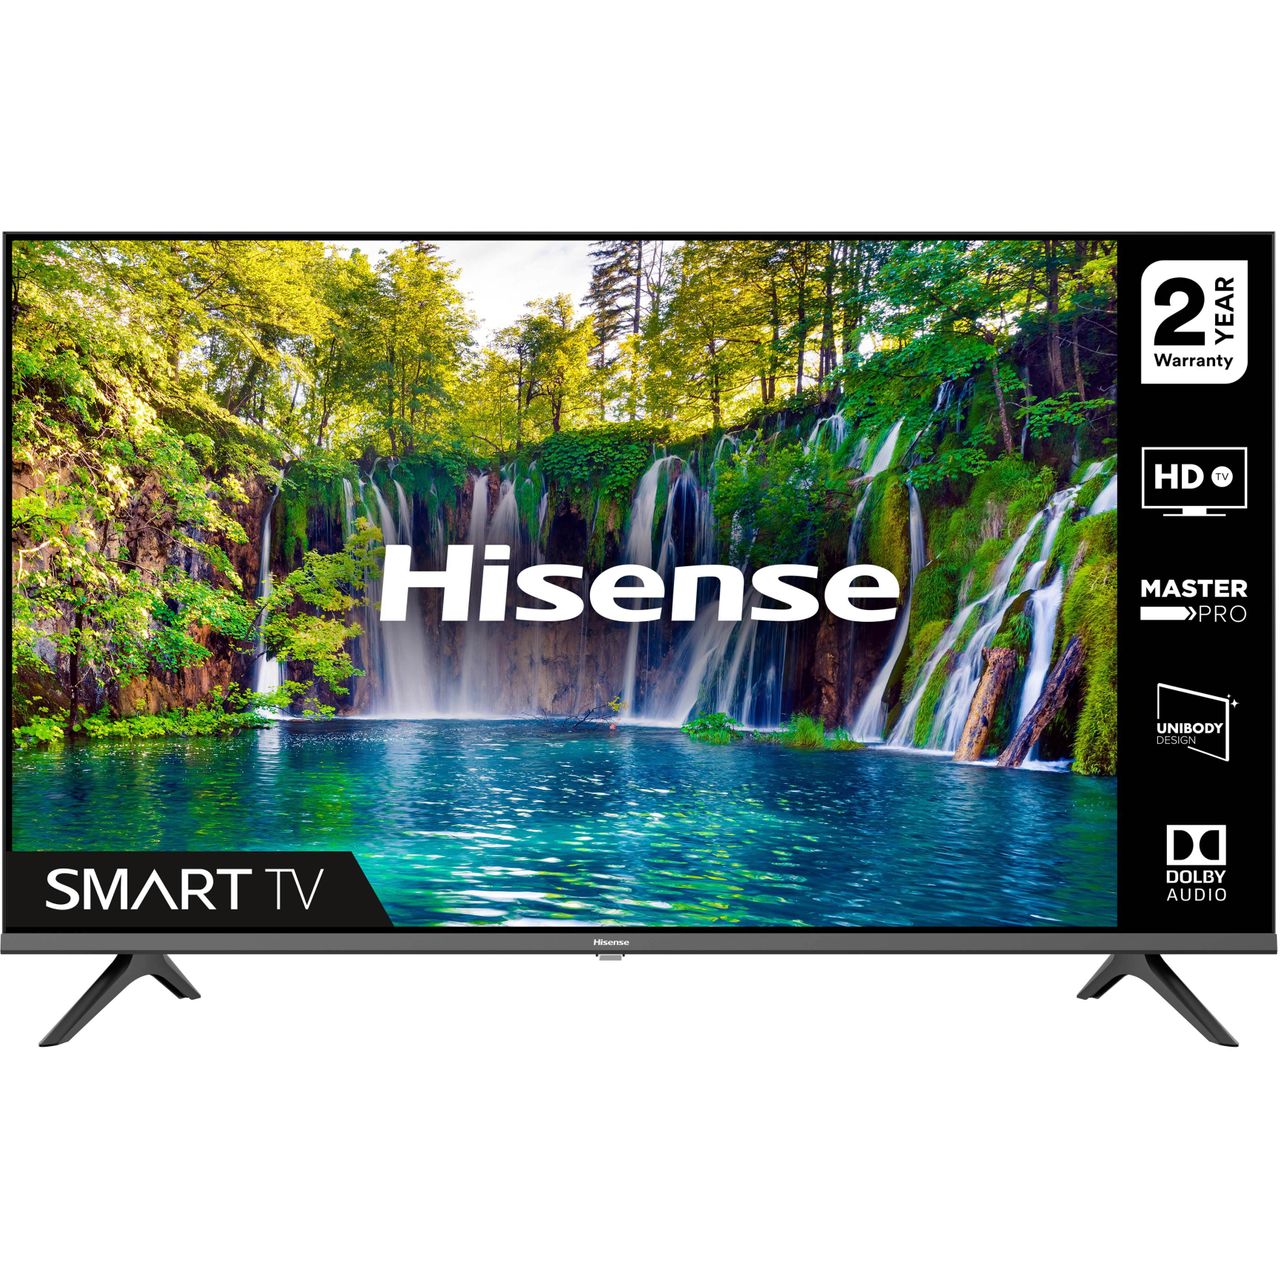 Hisense 32A5600FTUK 32 Inch TV Smart 720p HD Ready LED Freeview HD 2